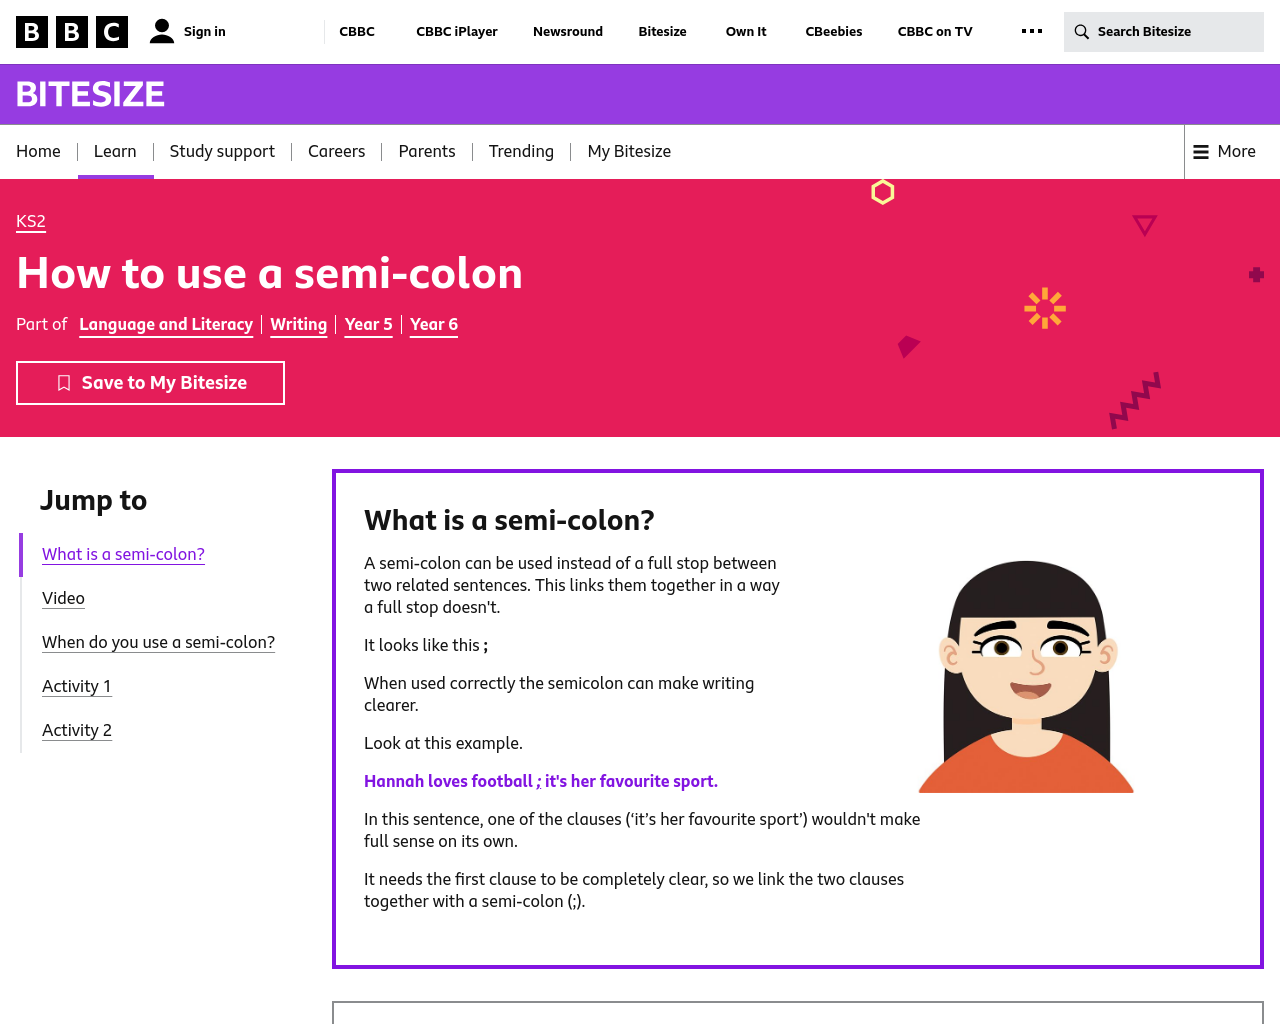 How to use a semi-colon